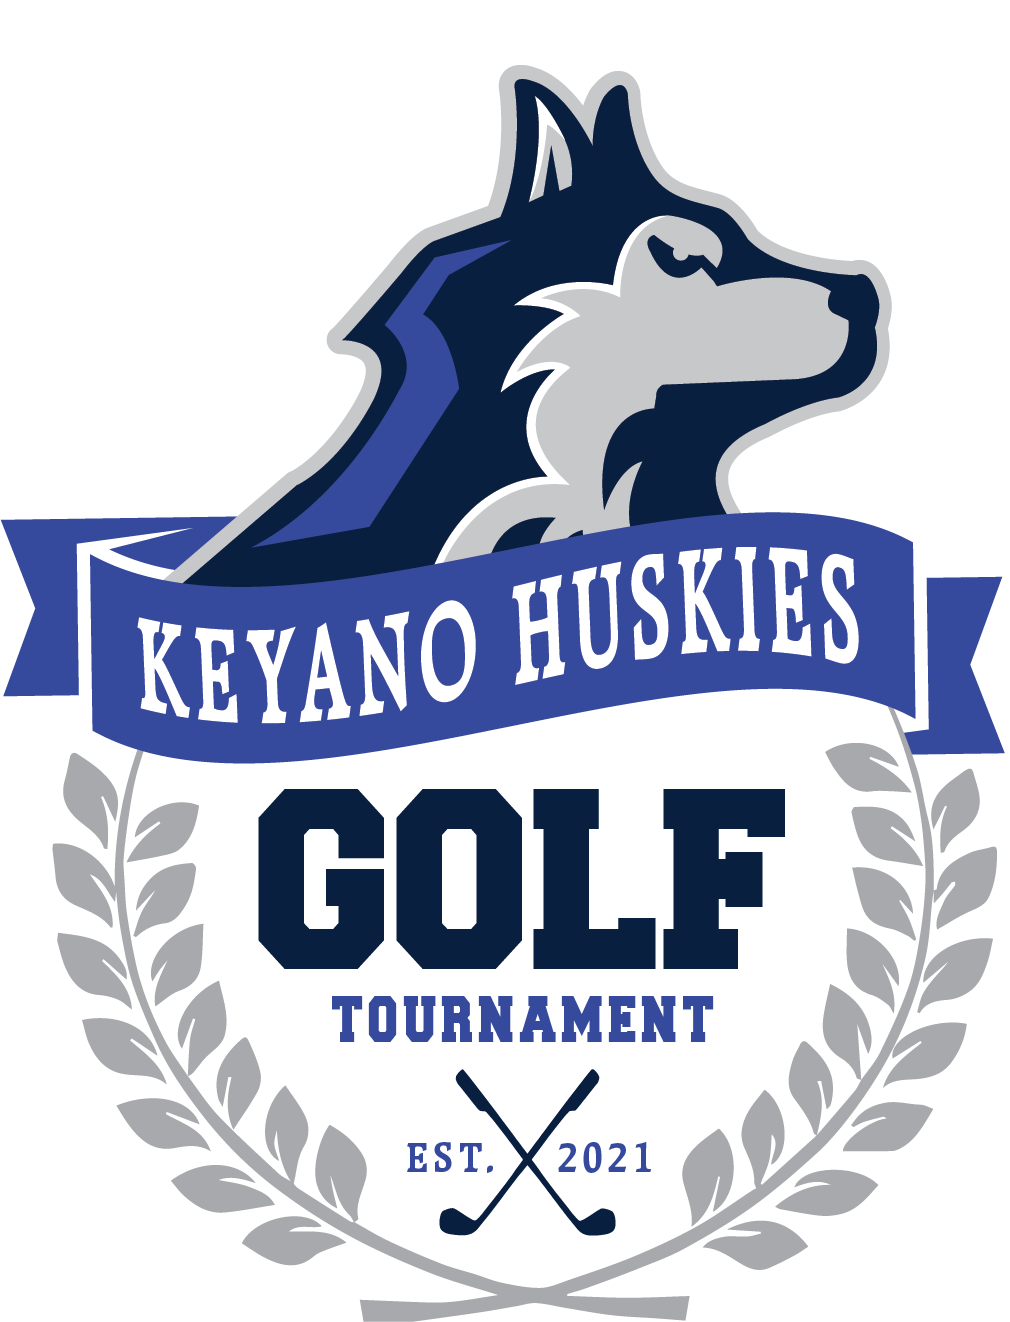 Huskies Golf Tournament Logo: Huskie head on a crest